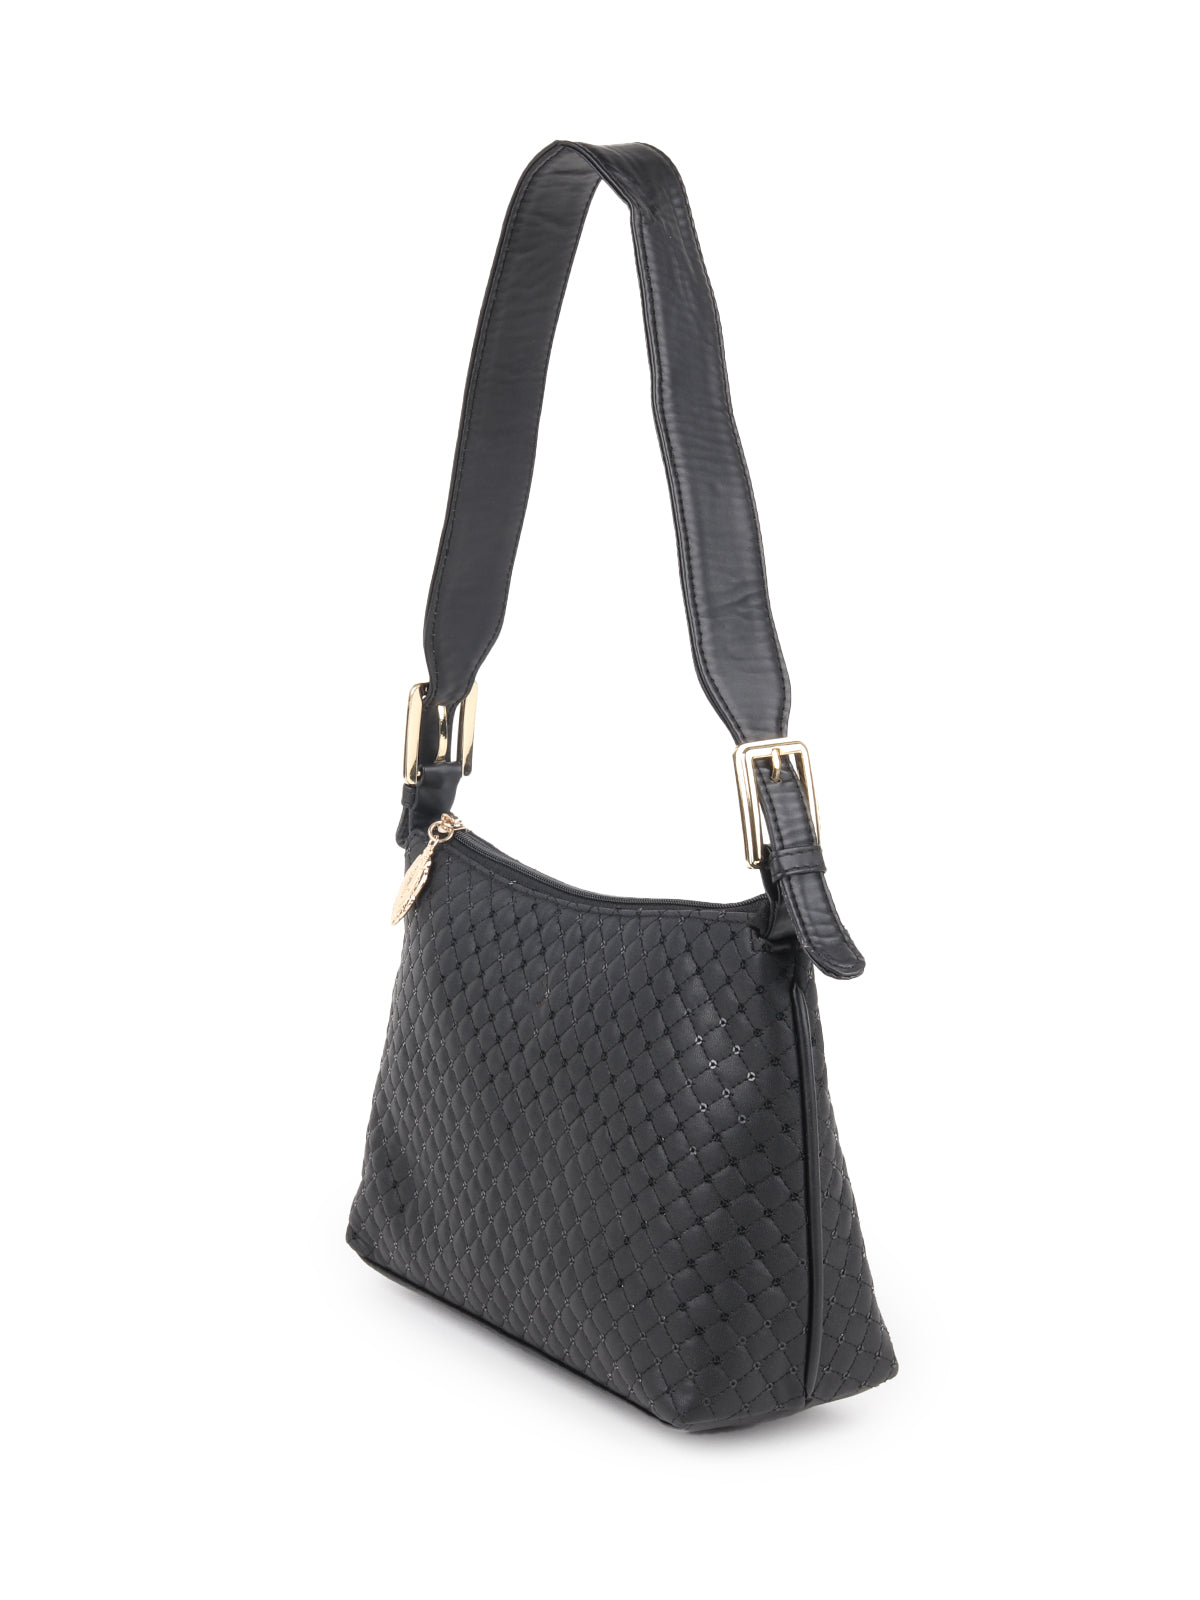 Odette Black Hand Bag For Women